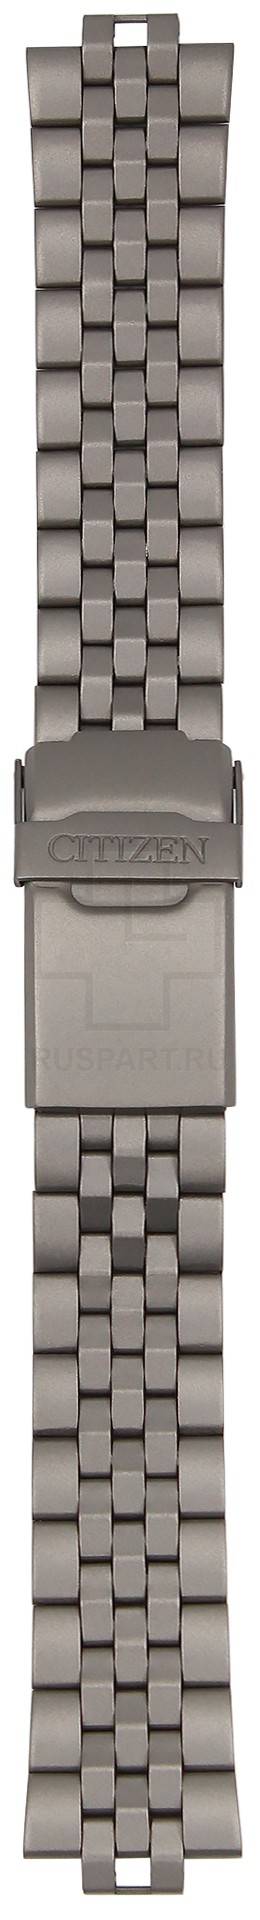 Citizen 59-J0210